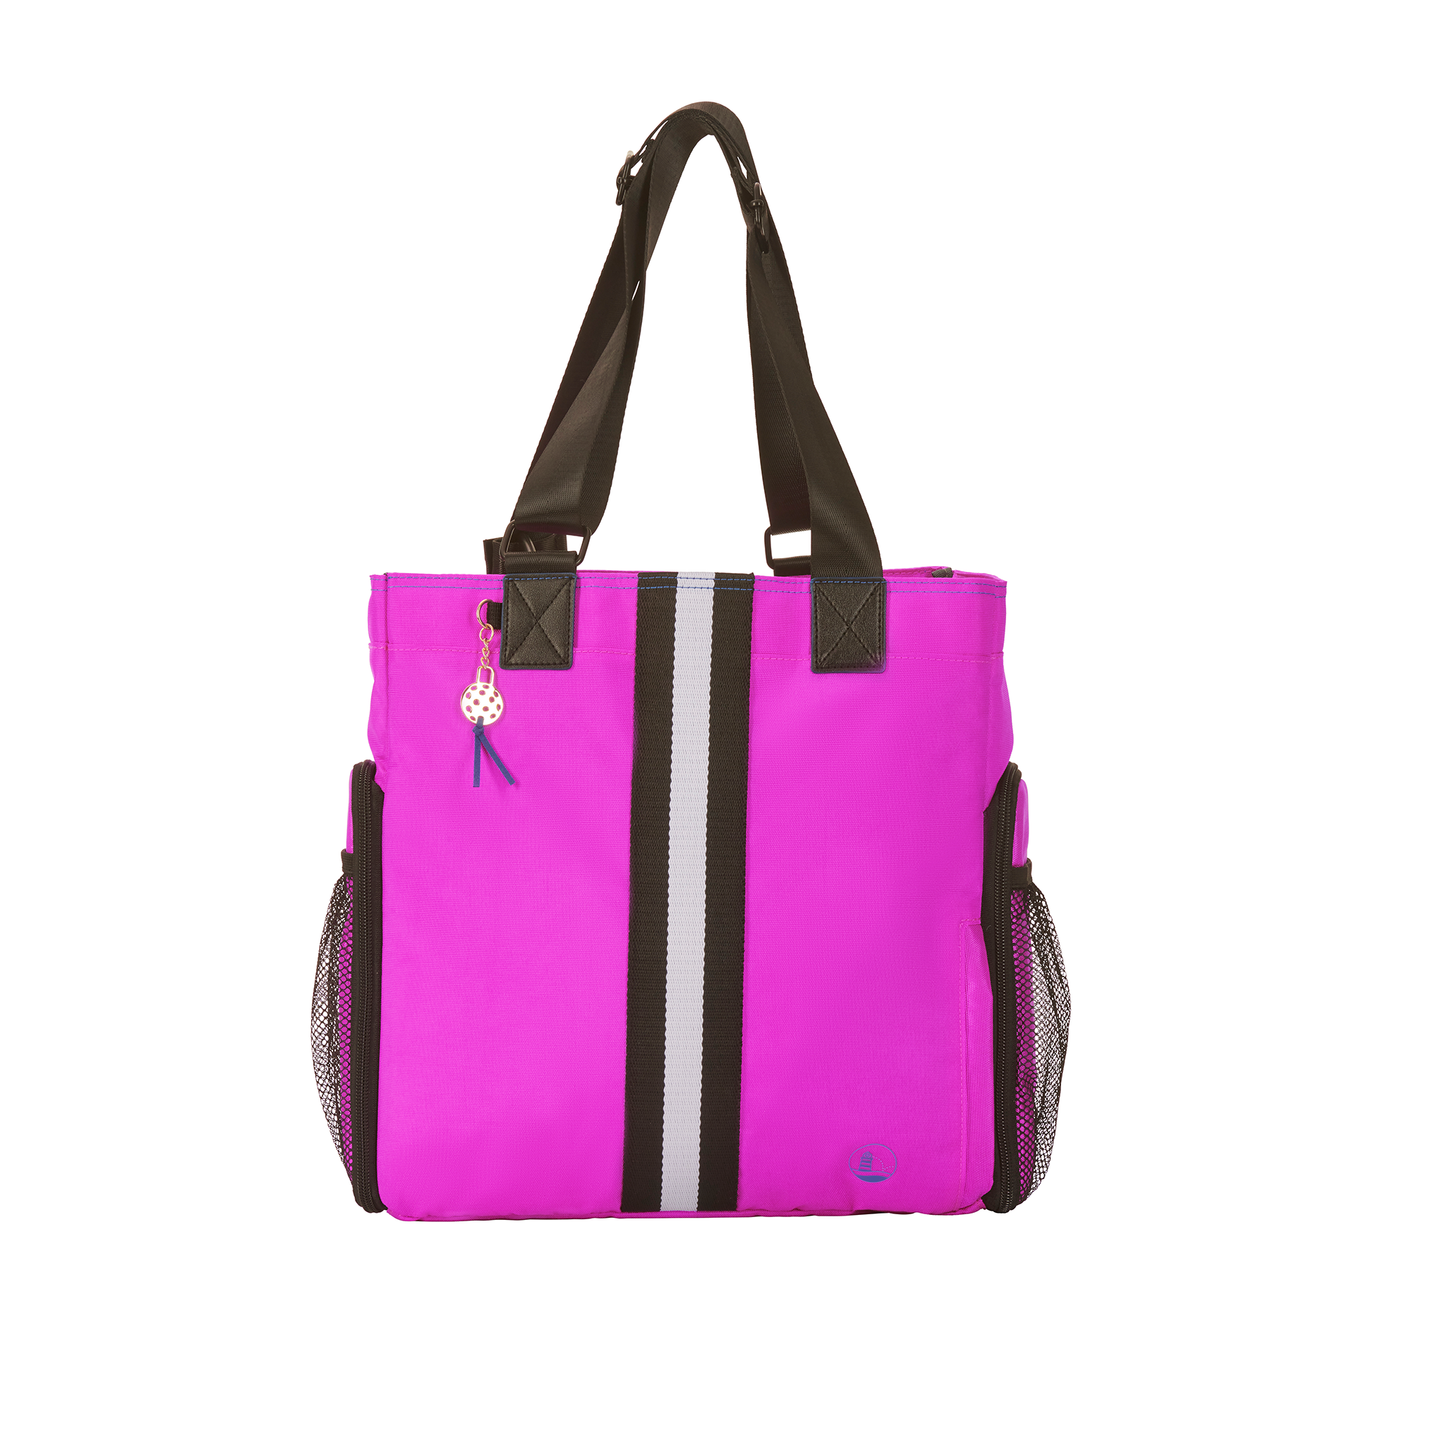 Women’s Pink designer Pickleball Tote with blk/white vert stripe, peri blue stitching & logo, elegant gold tone PB charm & zipper pulls